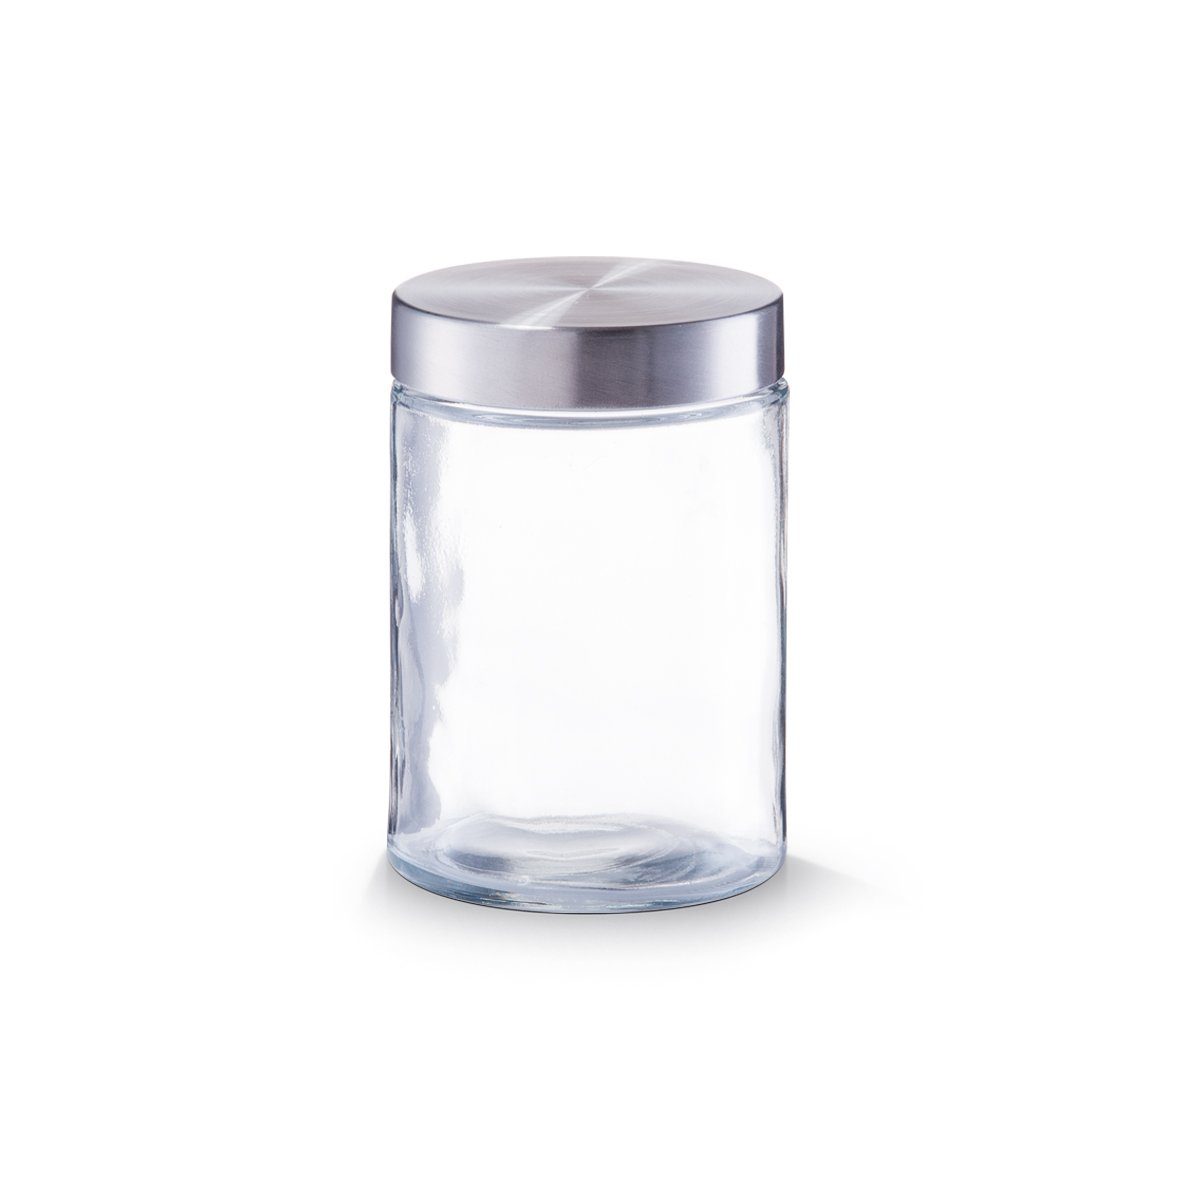 Zeller Present Vorratsglas Vorratsglas m. Edelstahldeckel, Glas/Edelstahl, 1100 ml, Glas/Edelstahl, transparent, 1160 ml, Ø11 x 16,5 cm